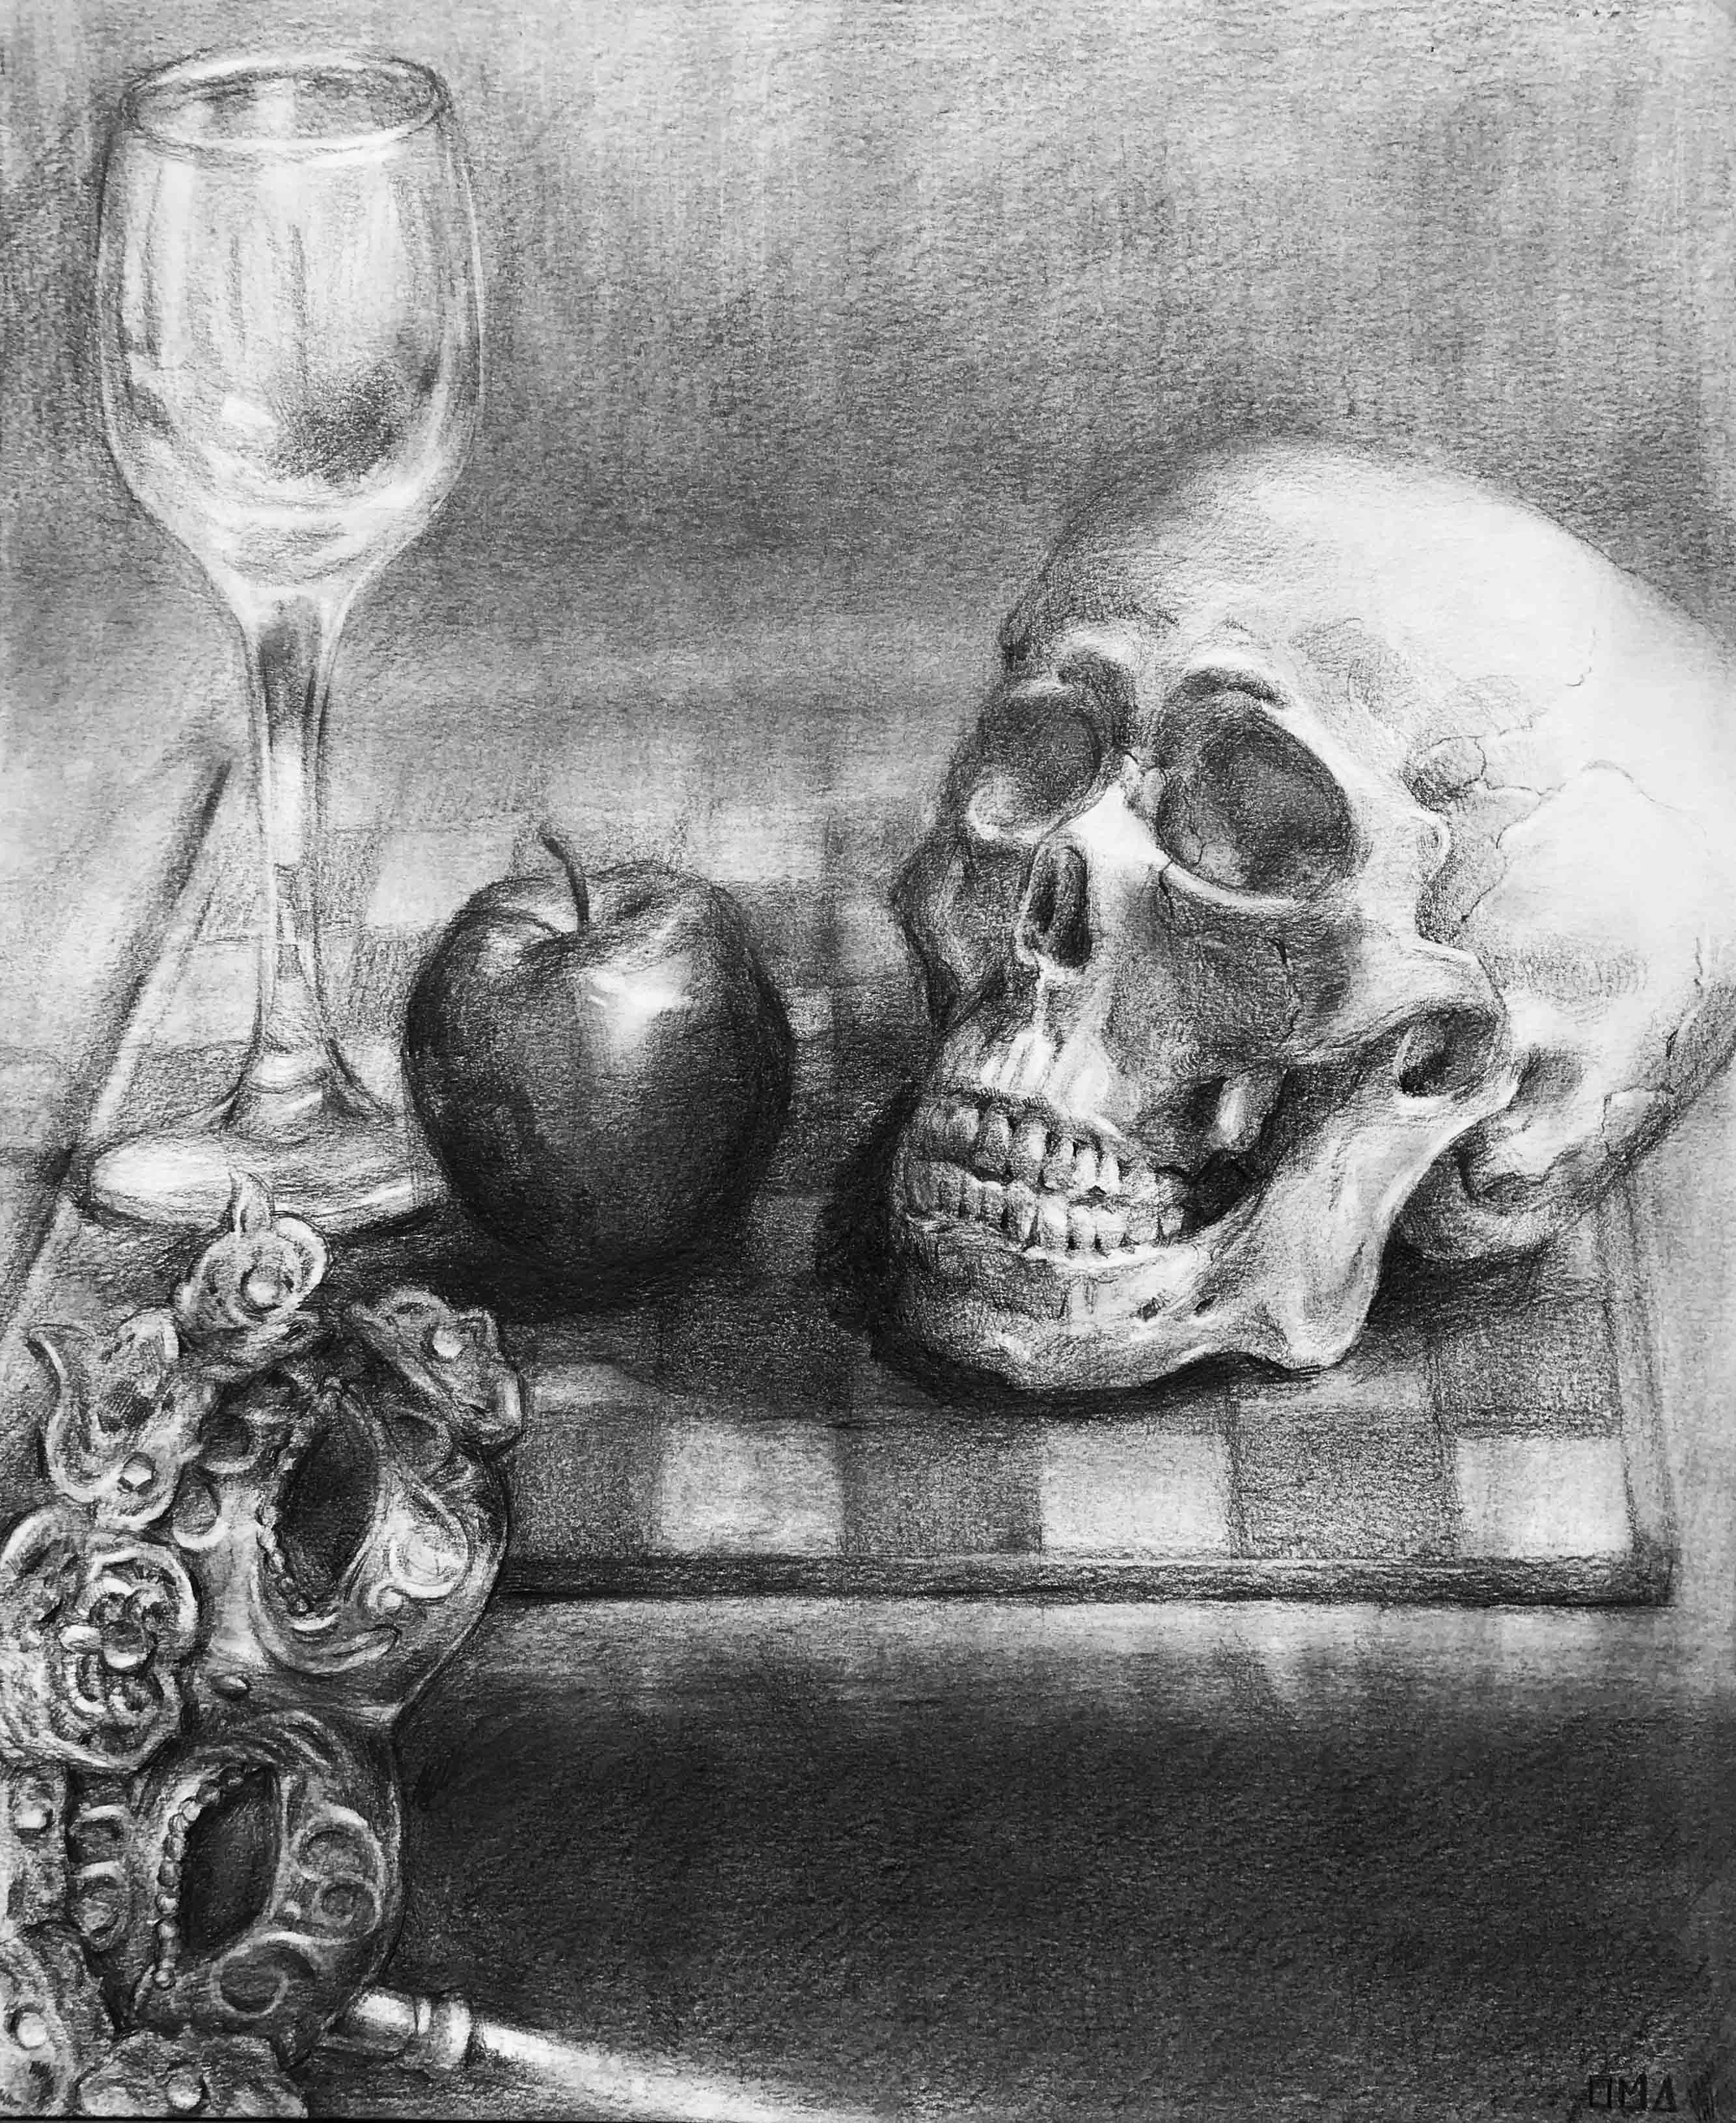 A still life drawing containing a skull